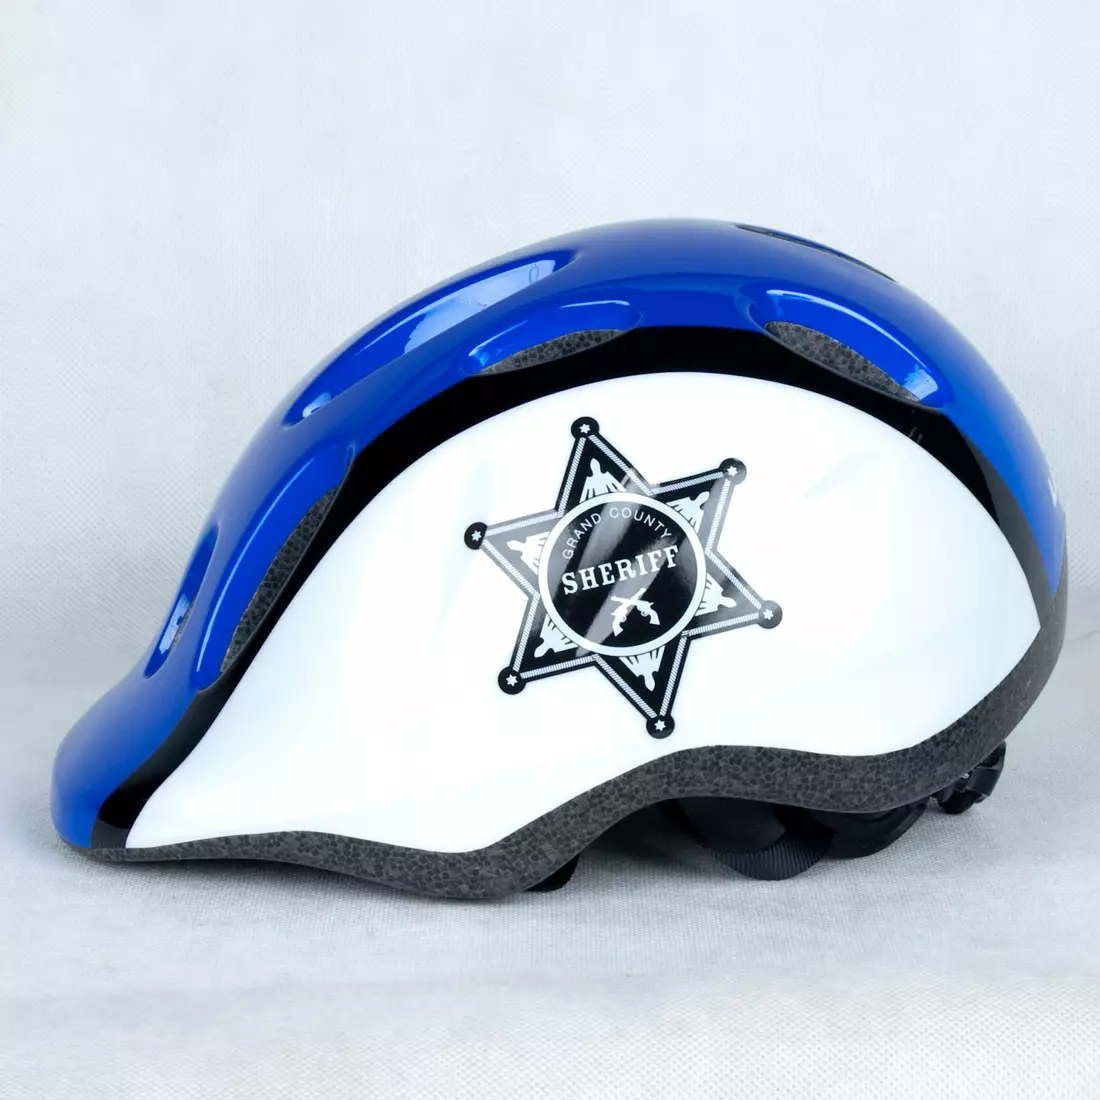 LAZER - MAX PLUS children's helmet - policeman